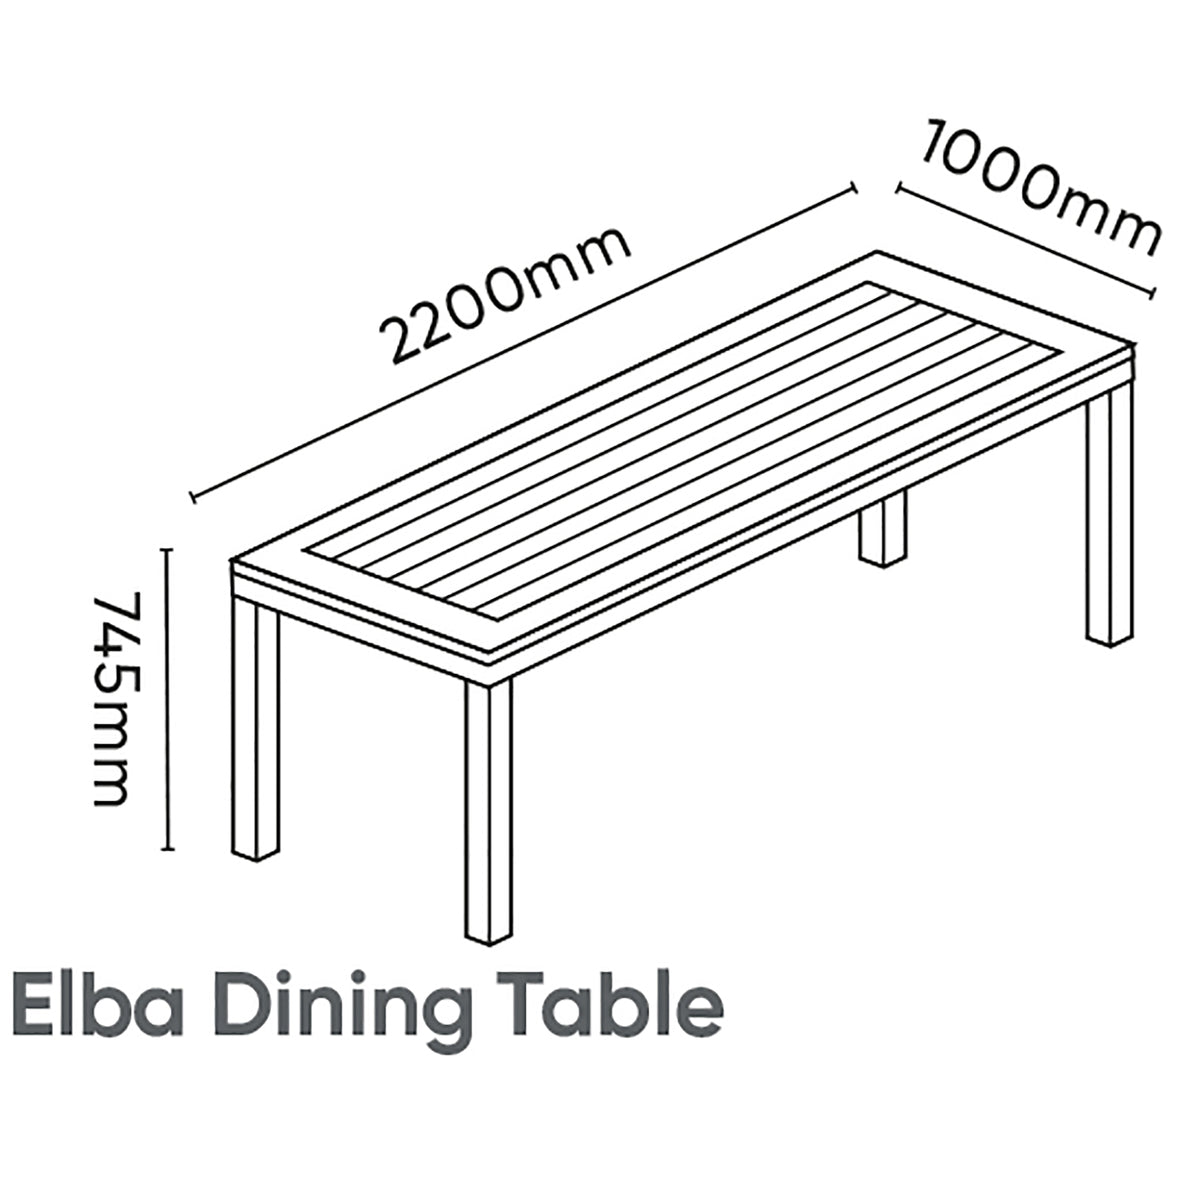 Kettler Elba Teak and Aluminium Rectangular Bench Set - 2.2m x 1m